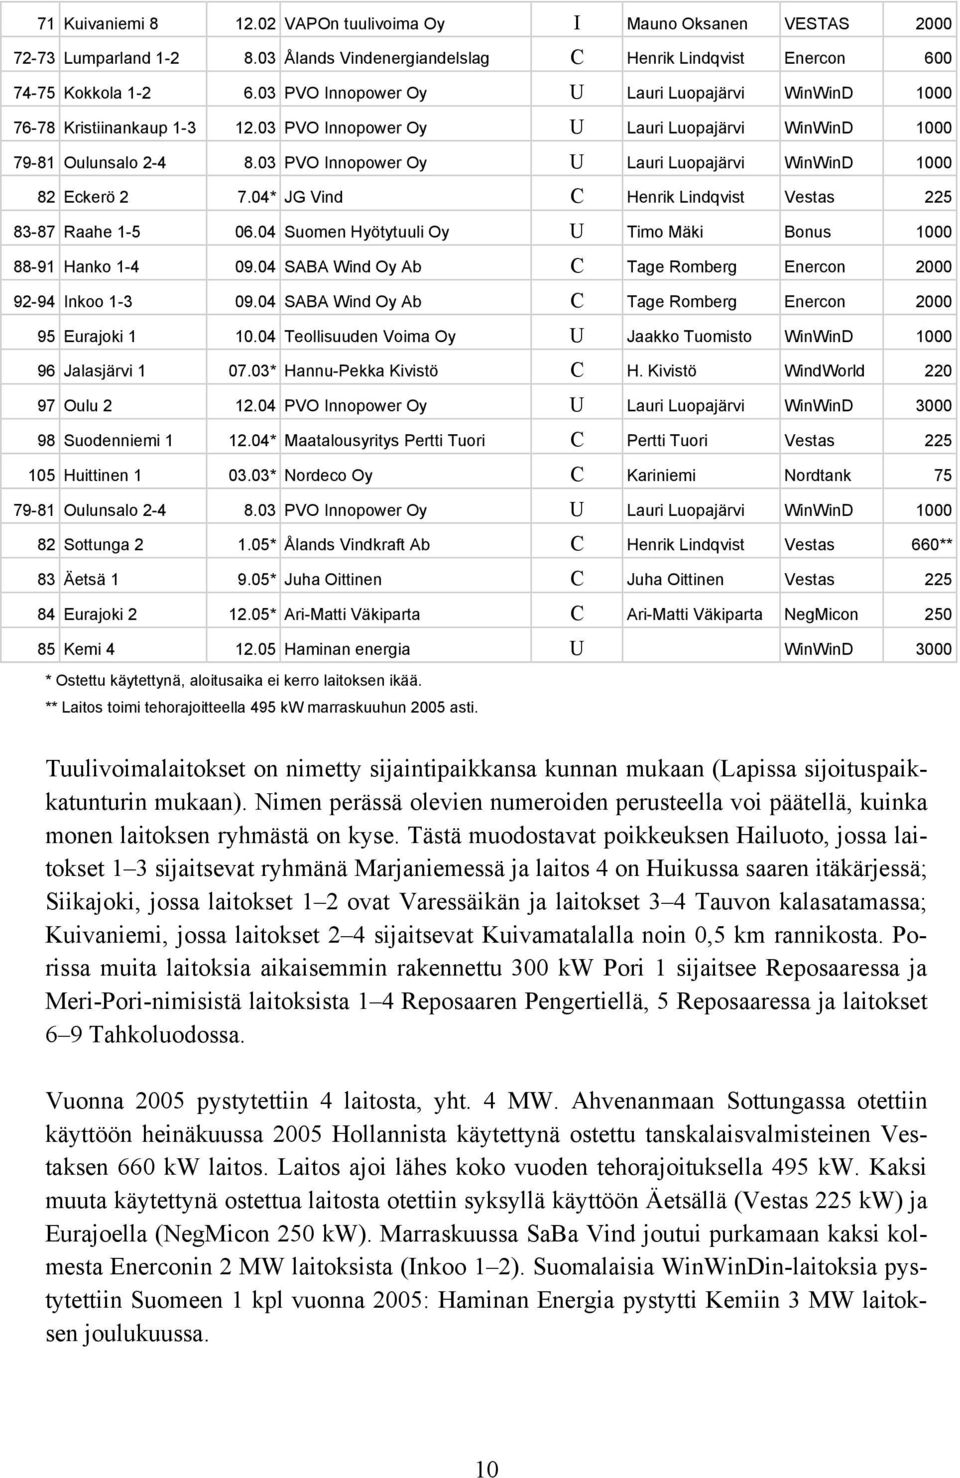 03 PVO Innopower Oy U Lauri Luopajärvi WinWinD 1000 82 Eckerö 2 7.04* JG Vind C Henrik Lindqvist Vestas 225 83-87 Raahe 1-5 06.04 Suomen Hyötytuuli Oy U Timo Mäki Bonus 1000 88-91 Hanko 1-4 09.